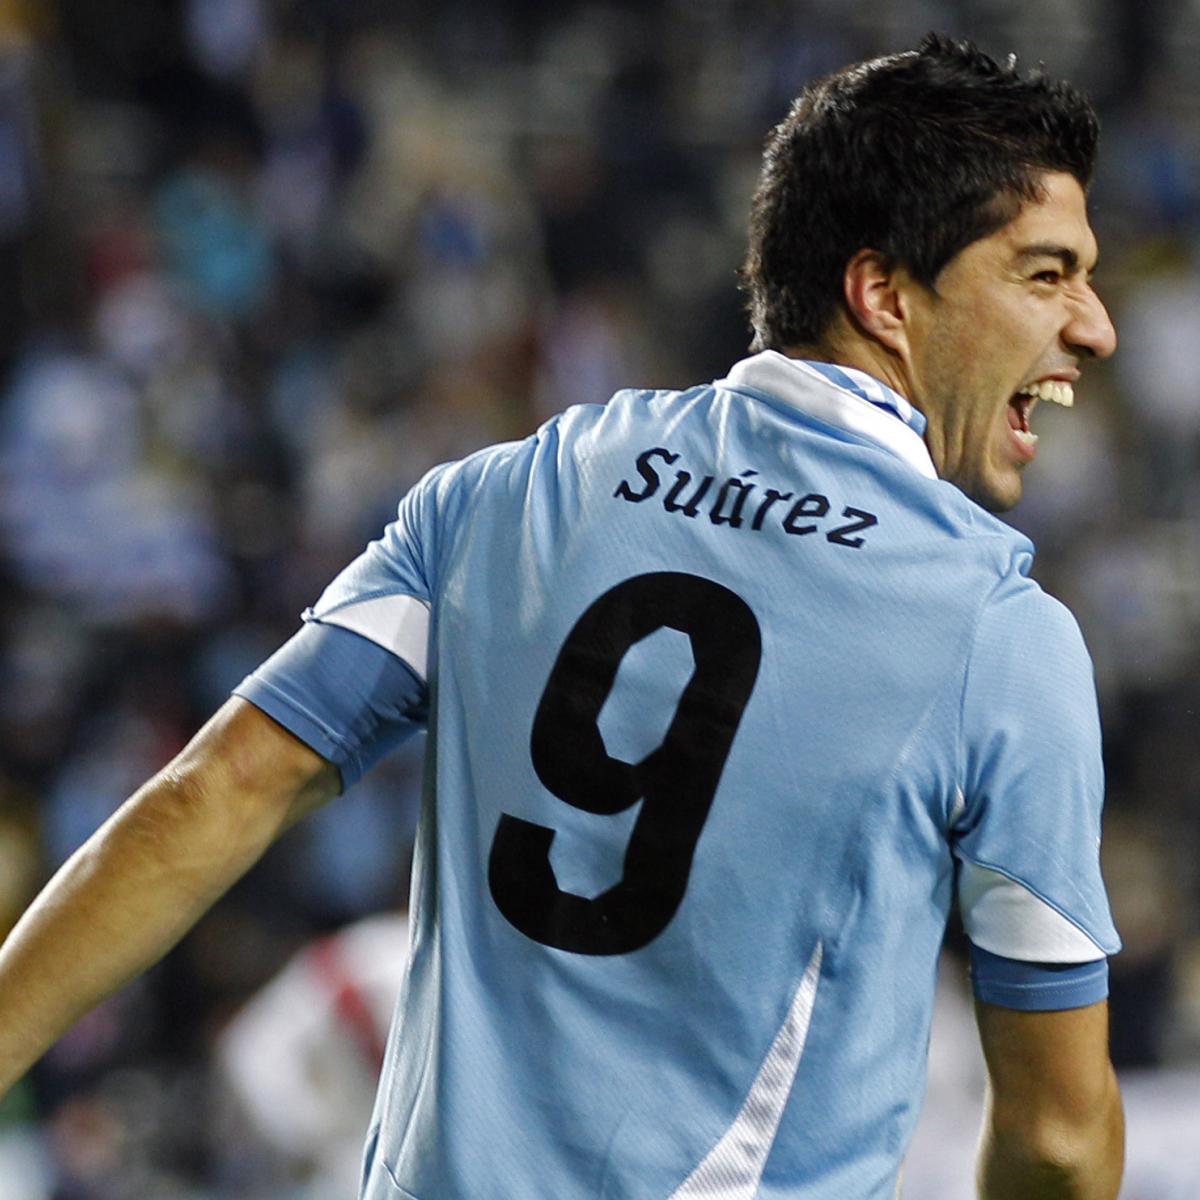 Complete Analysis of Luis Suarez's Liverpool Role vs. Uruguay Role